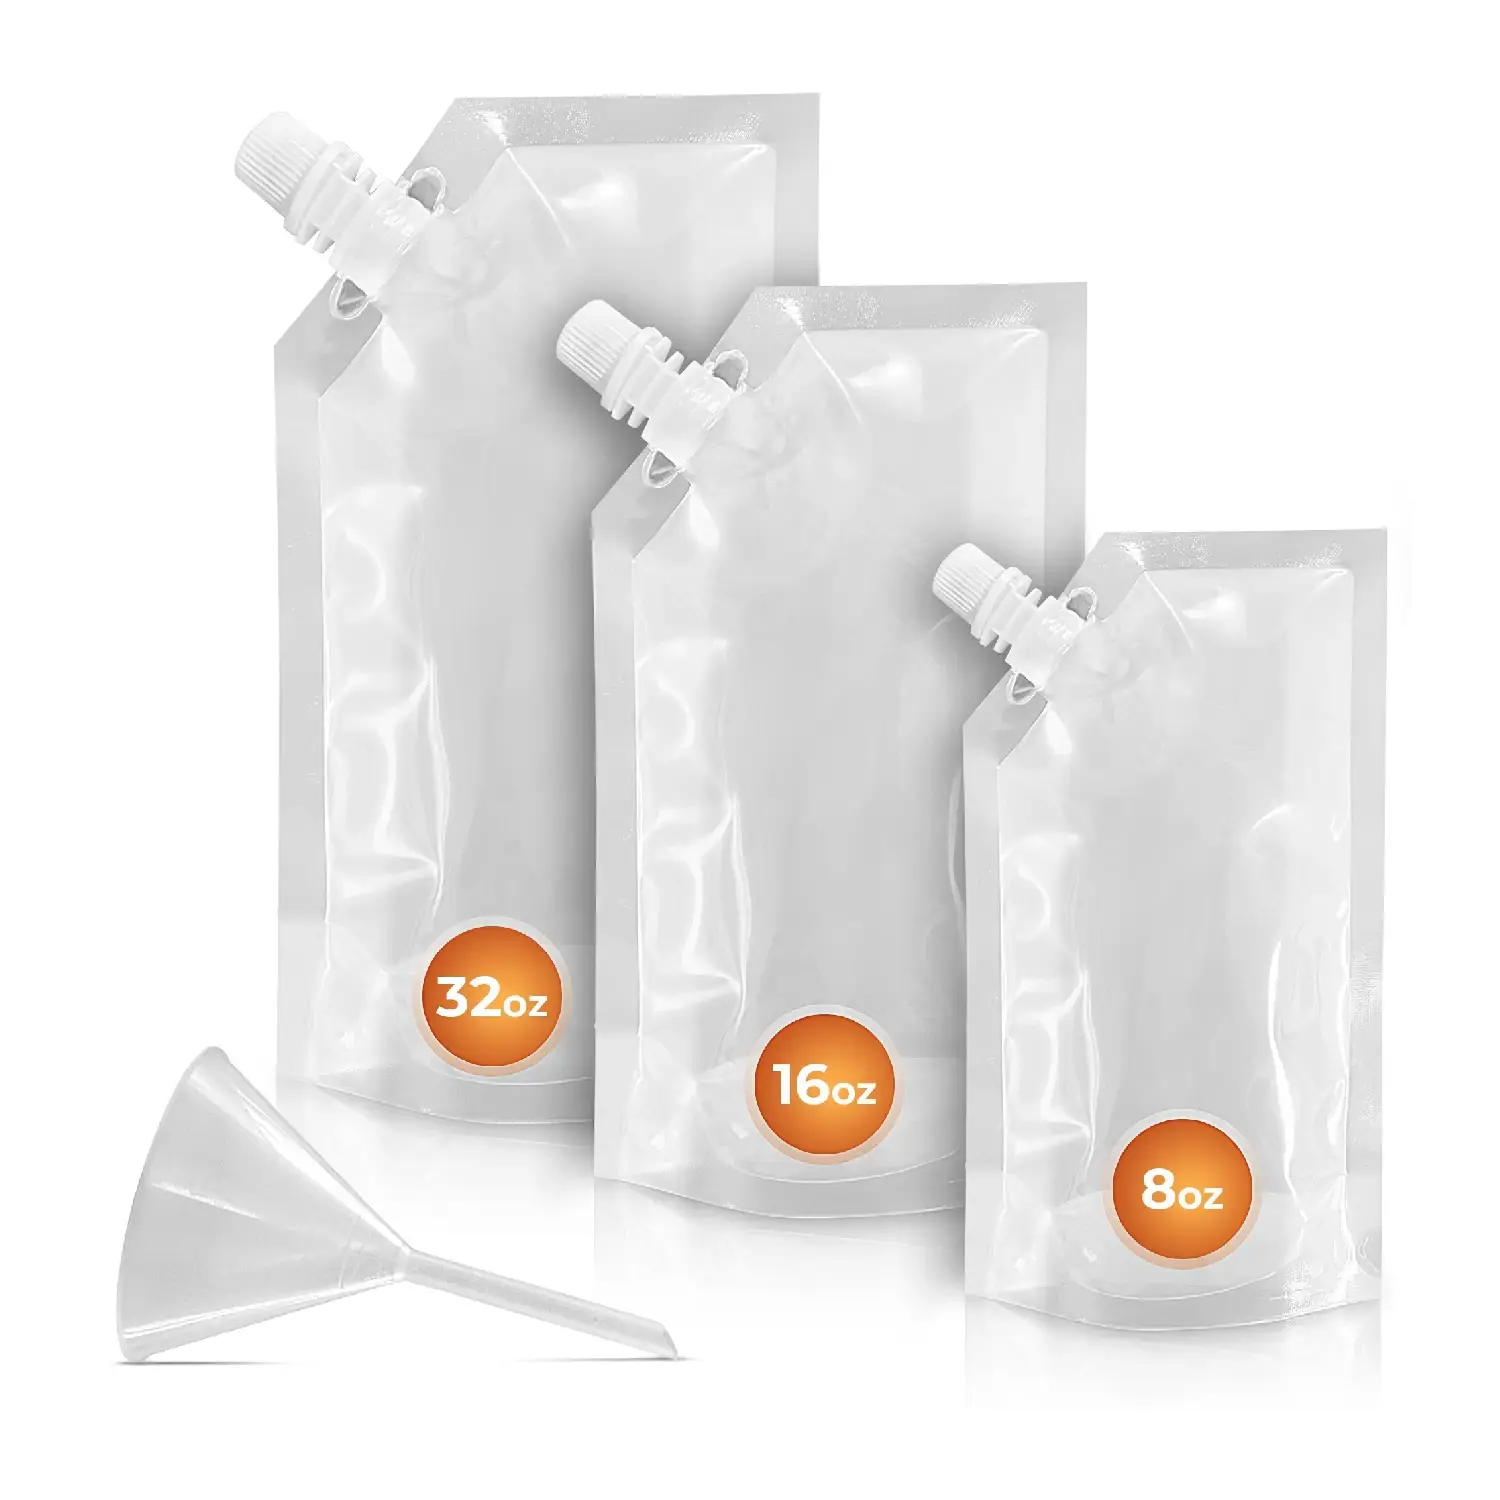 Zk Plastic Drinking Flasks - Set Of 3